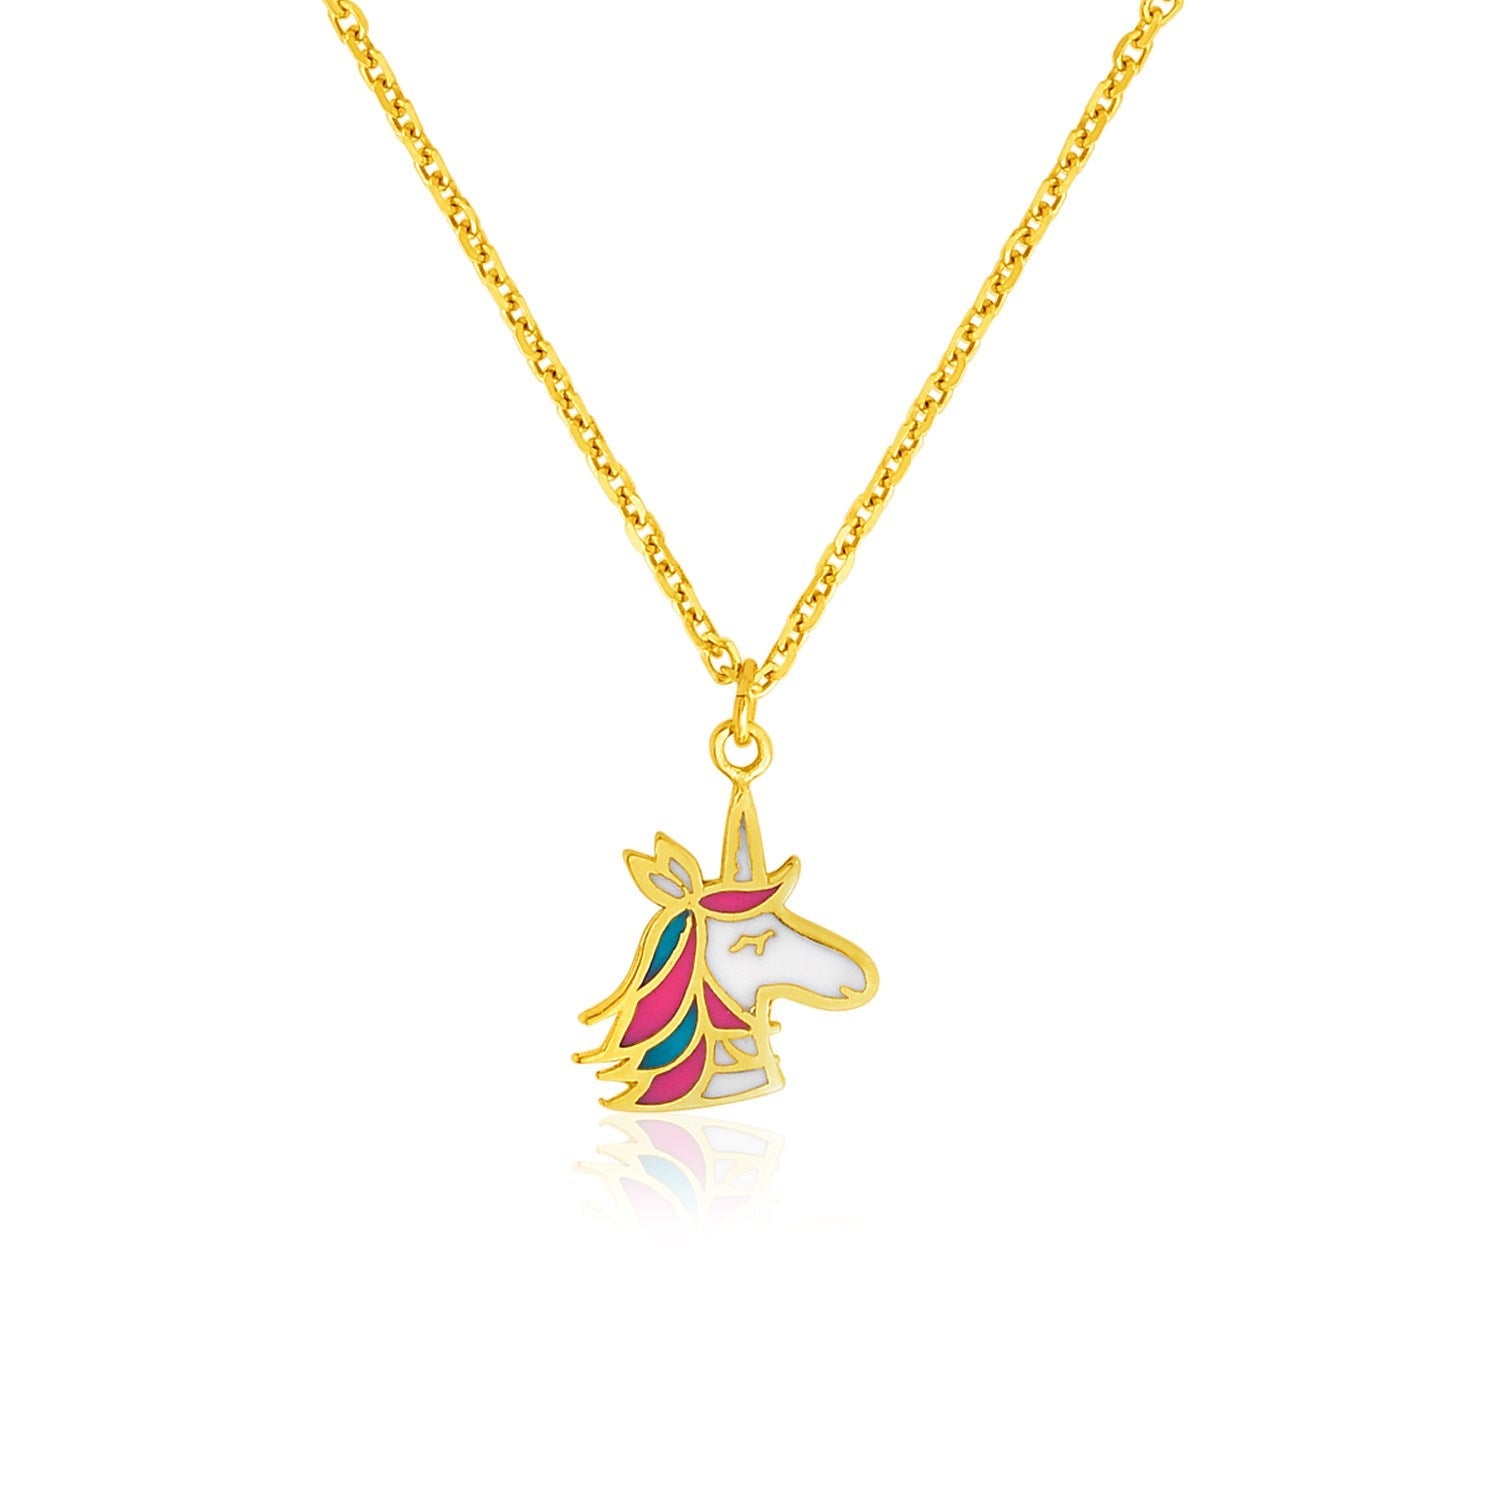 14k Yellow Gold Childrens Necklace with Enameled Unicorn Pendant - LinkagejewelrydesignLinkagejewelrydesign